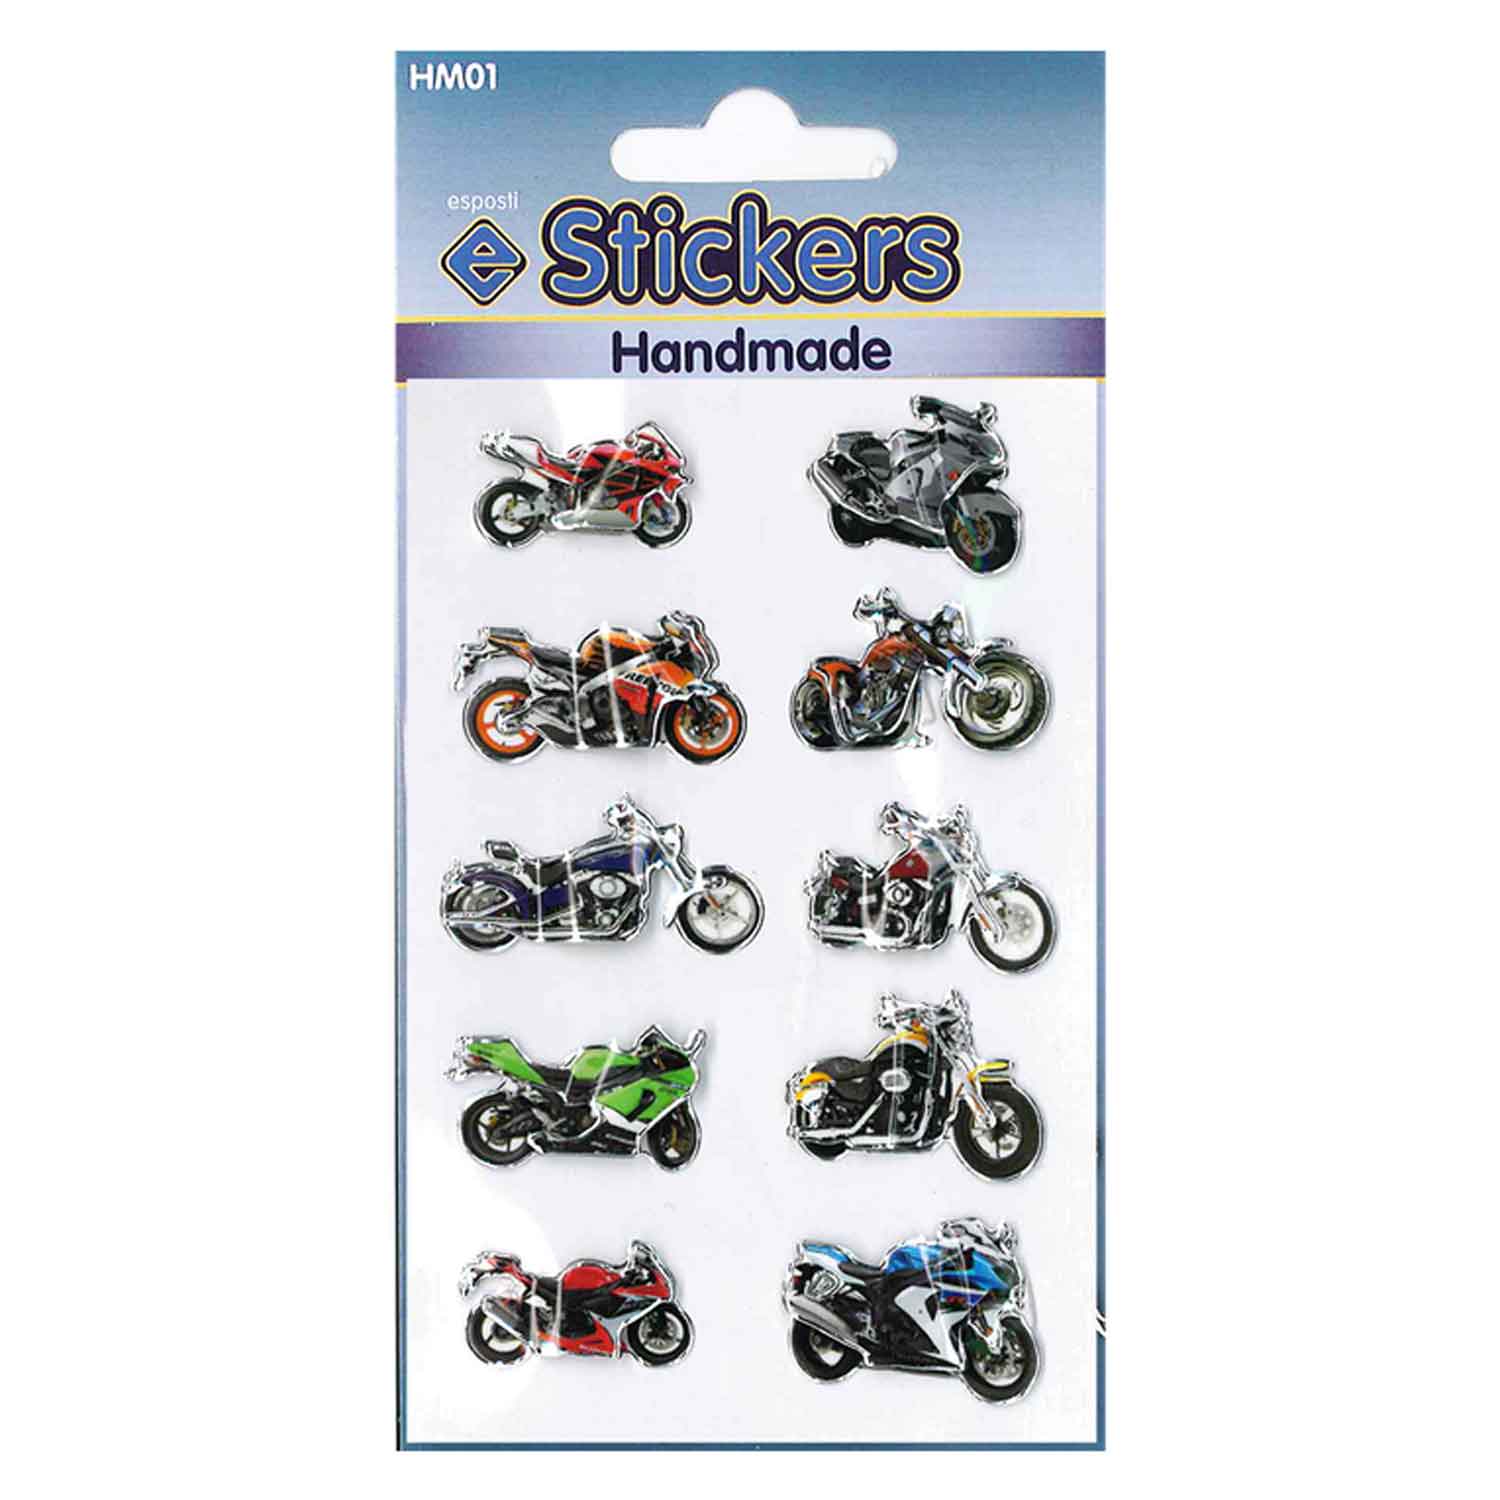 Motorbikes Self Adhesive Handmade Novelty Stickers - Pack of 10